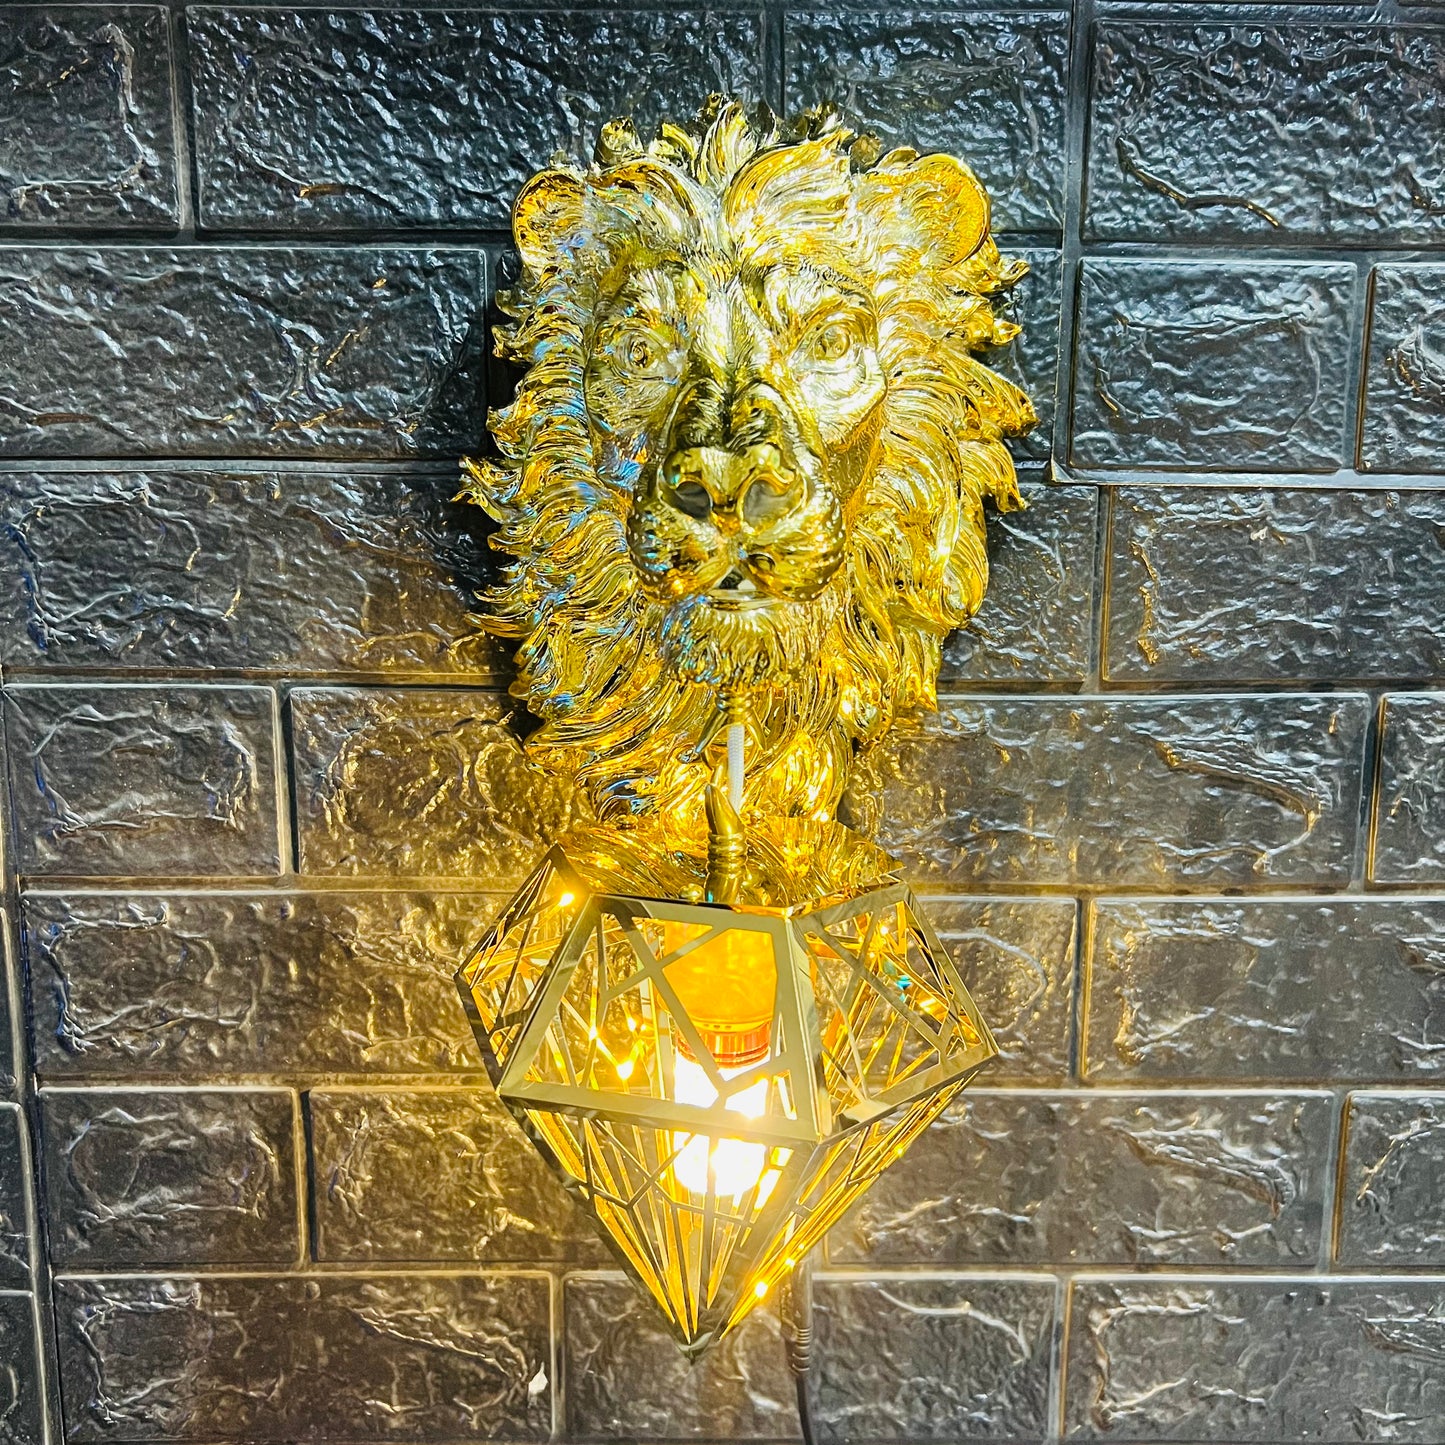 WL9112-1 Wall Lamp Lion Face 3 in 1 light 1 Year Warranty Golden